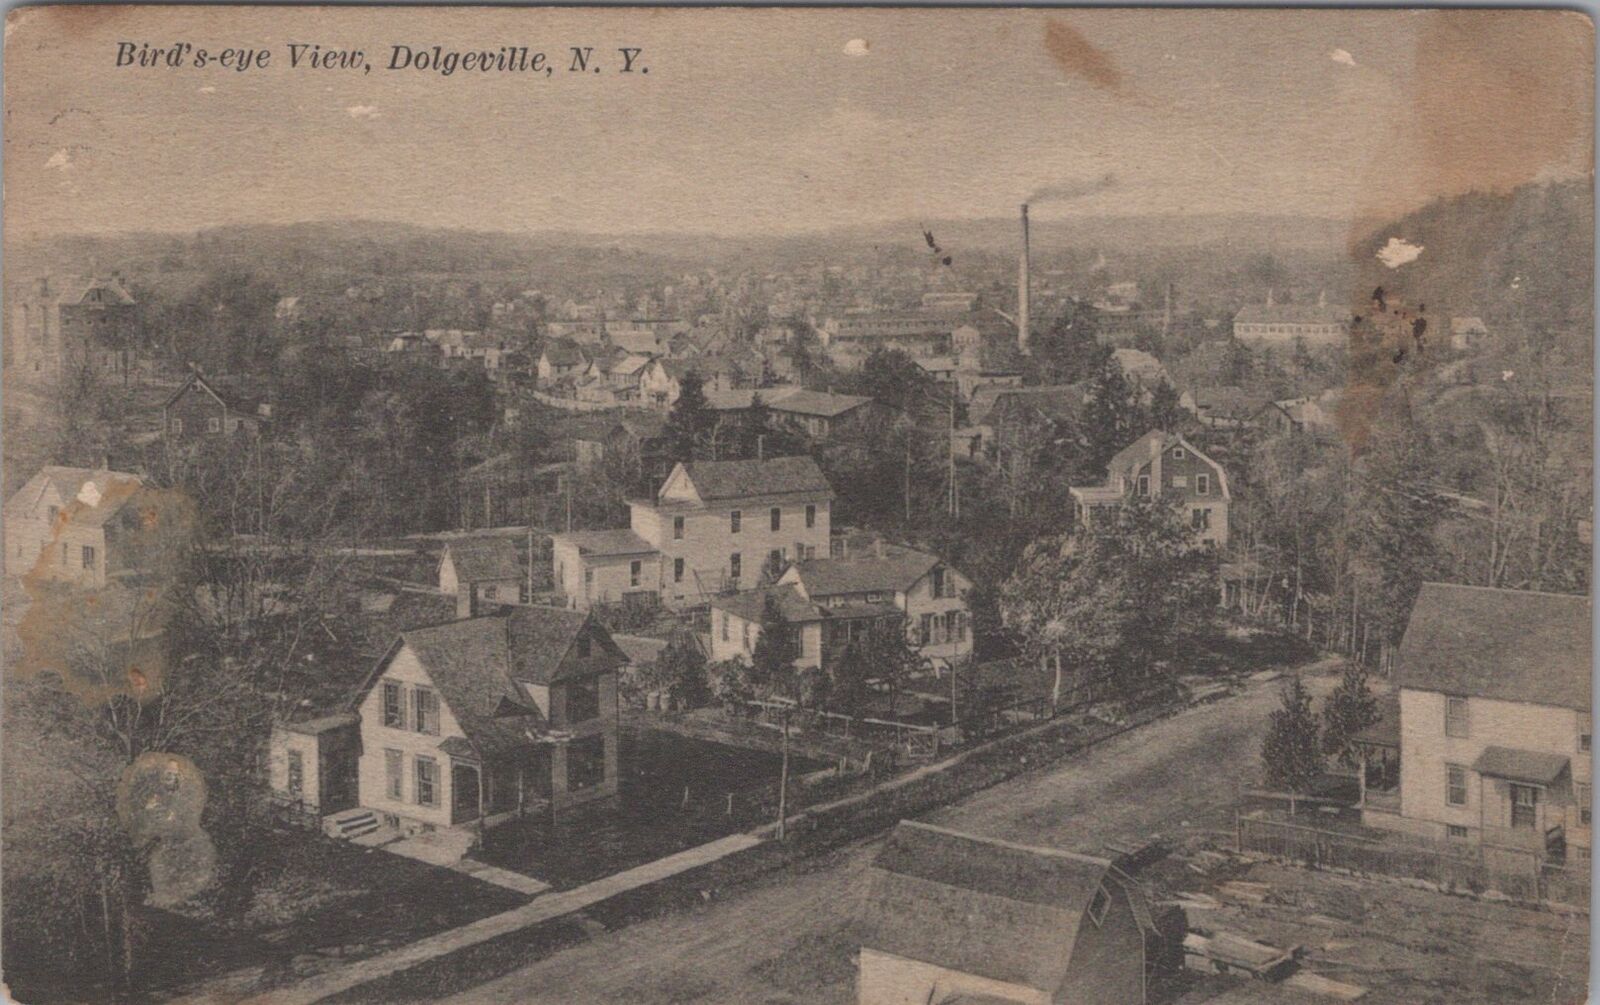 Bird's-eye View, Dolgeville, New York, Camden Vintage Postcard